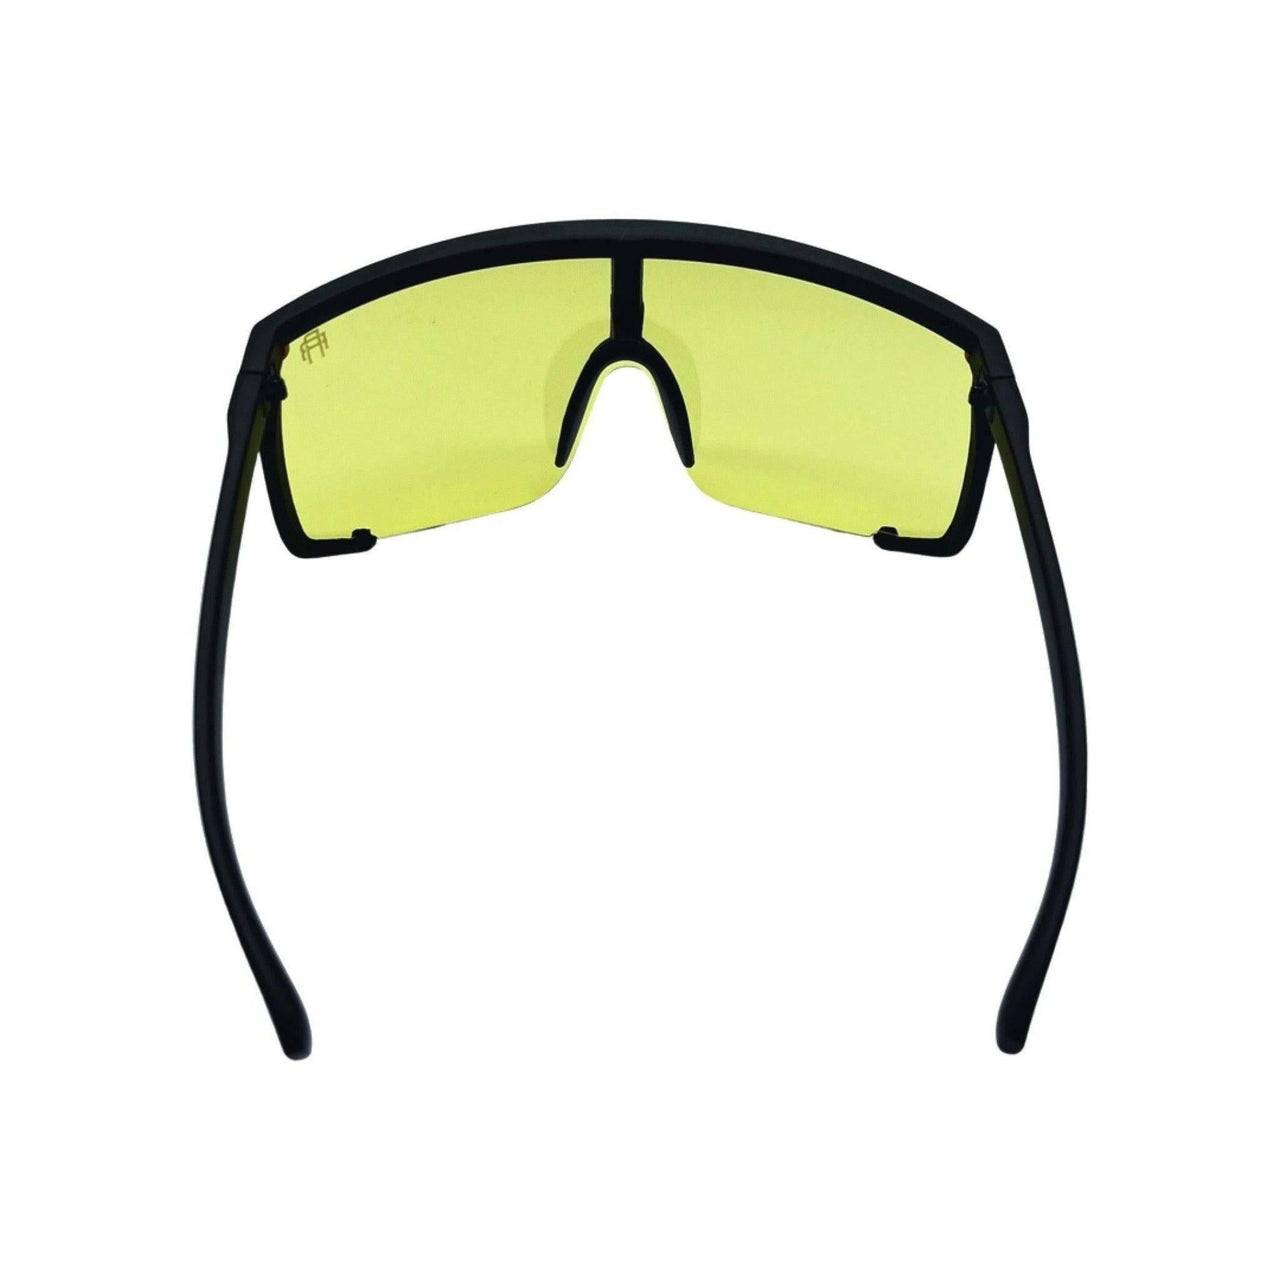 Steezy Yellow Transparent Sunglasses - Rebel Reaper Clothing Company Sunglasses